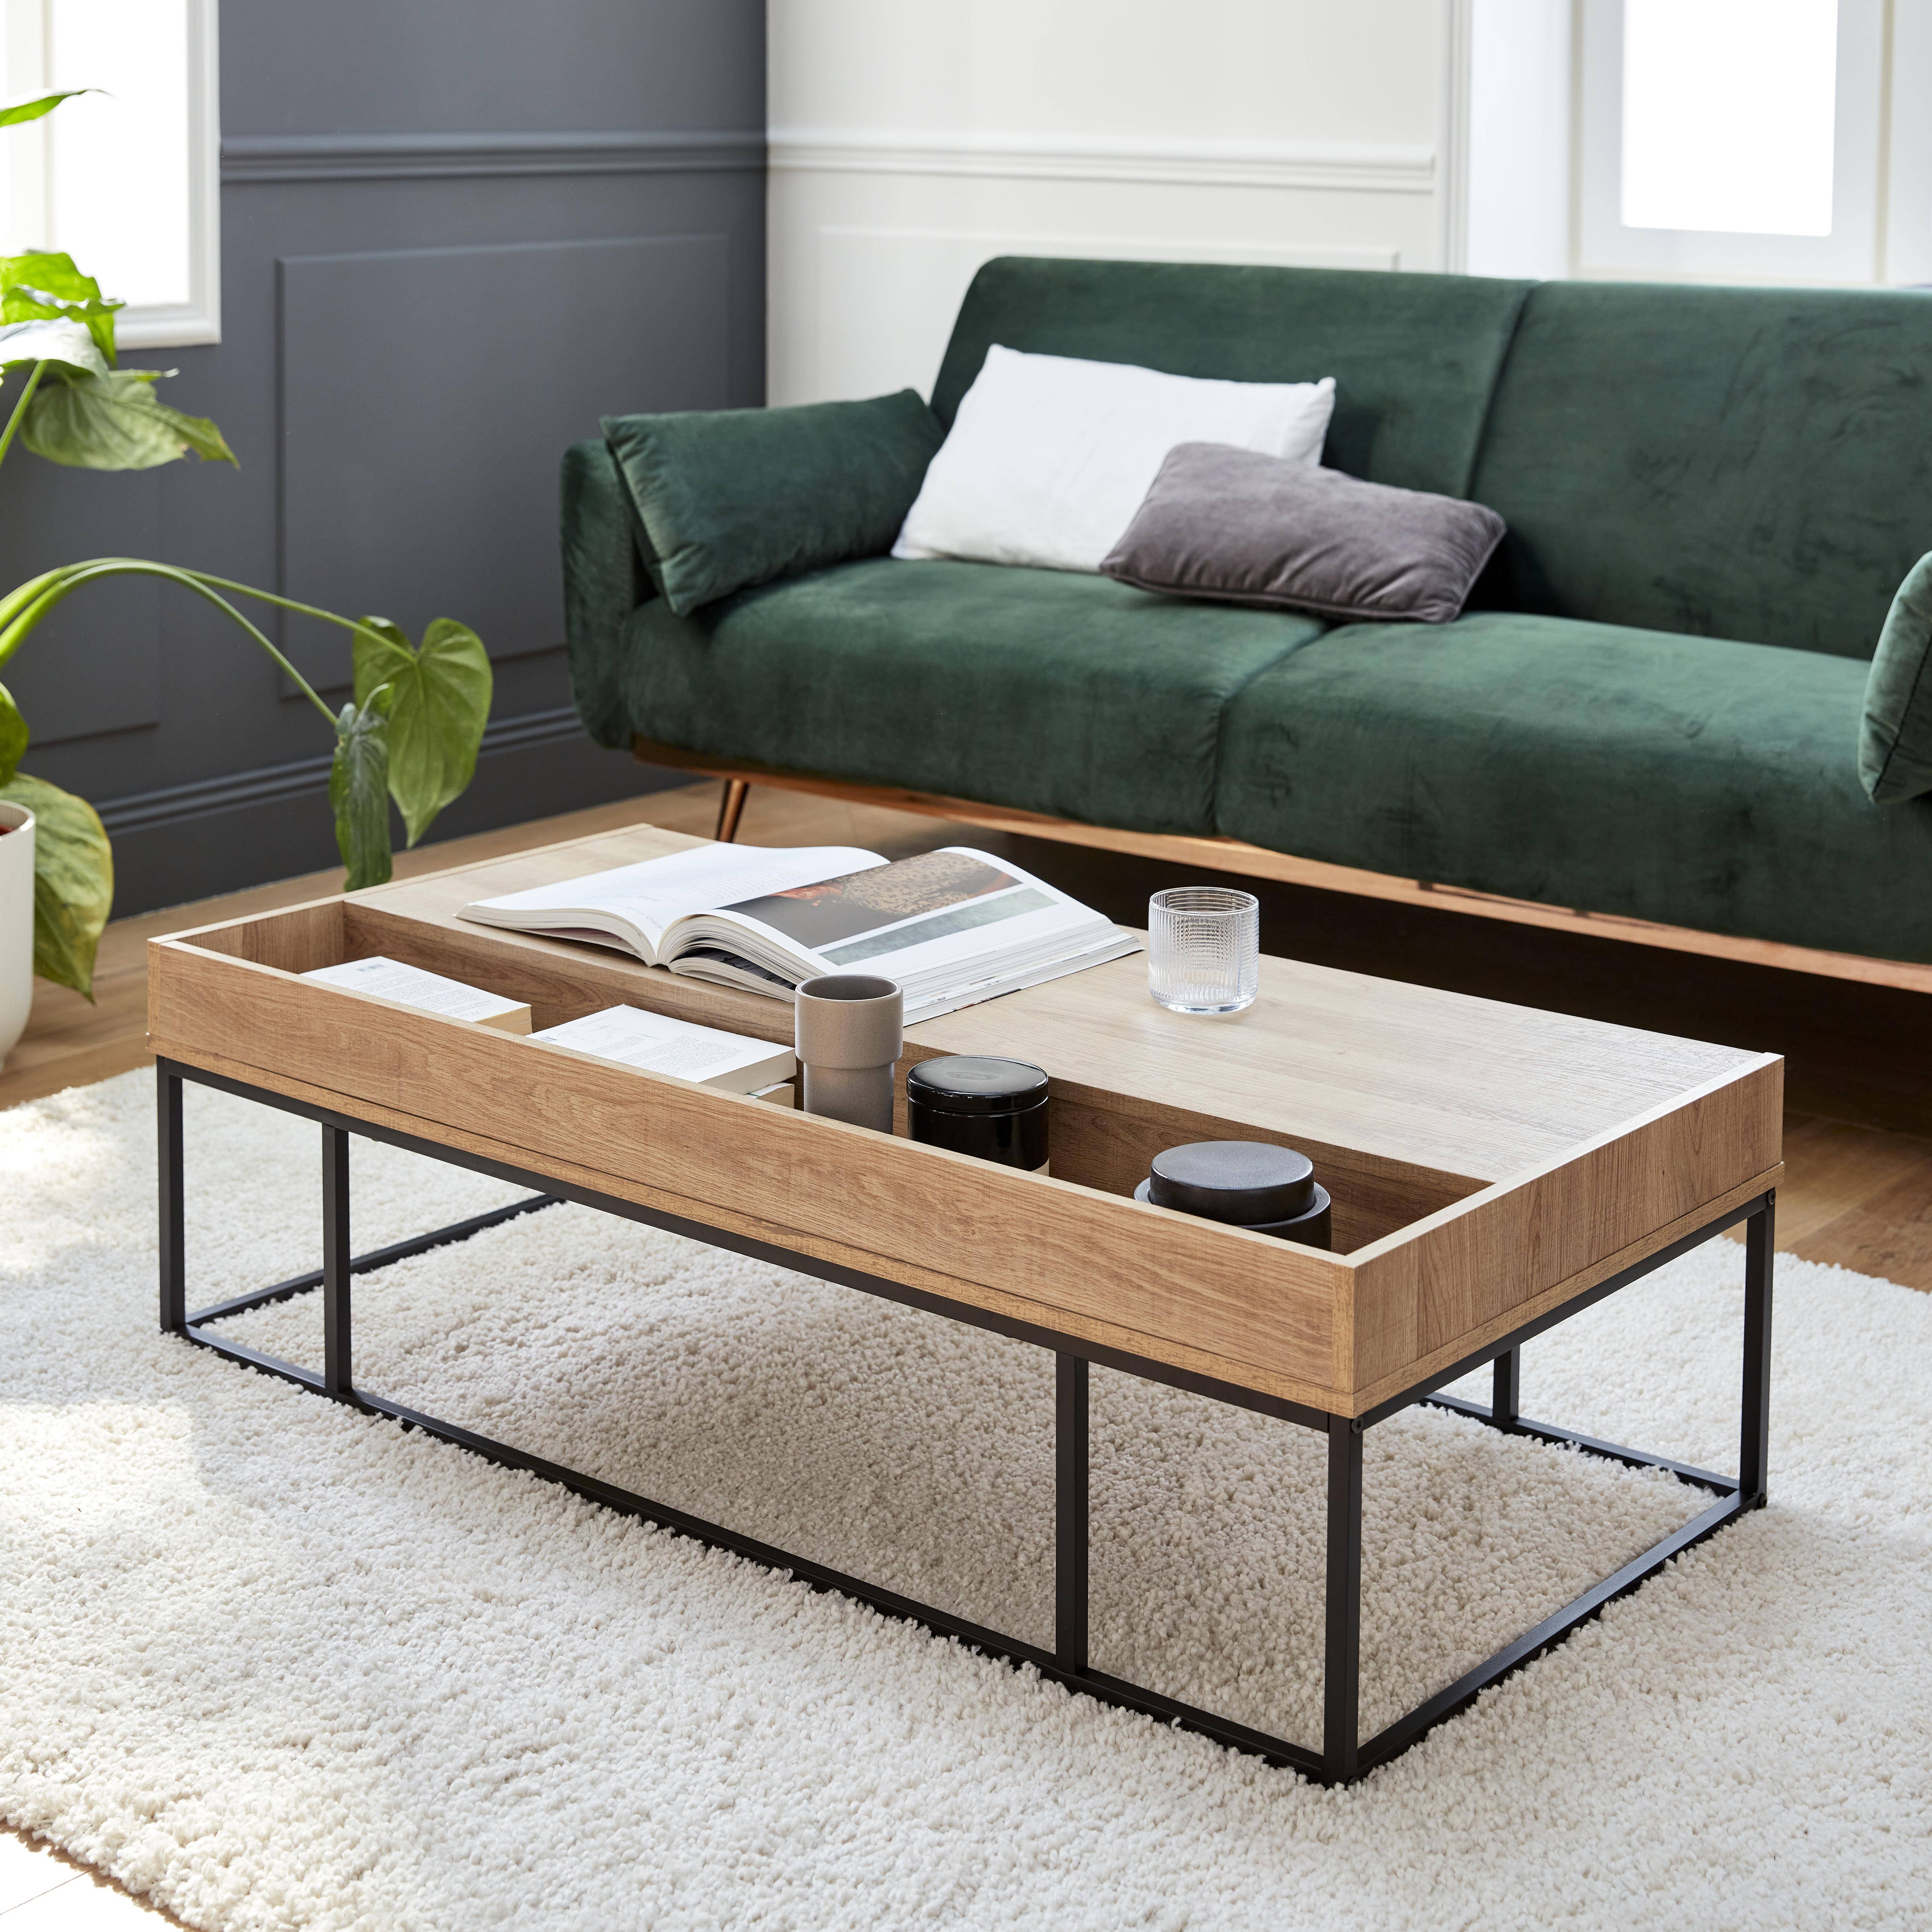 Metal and wood-effect coffee table, 120x59x34.5cm, Magnus, Black,sweeek,Photo2